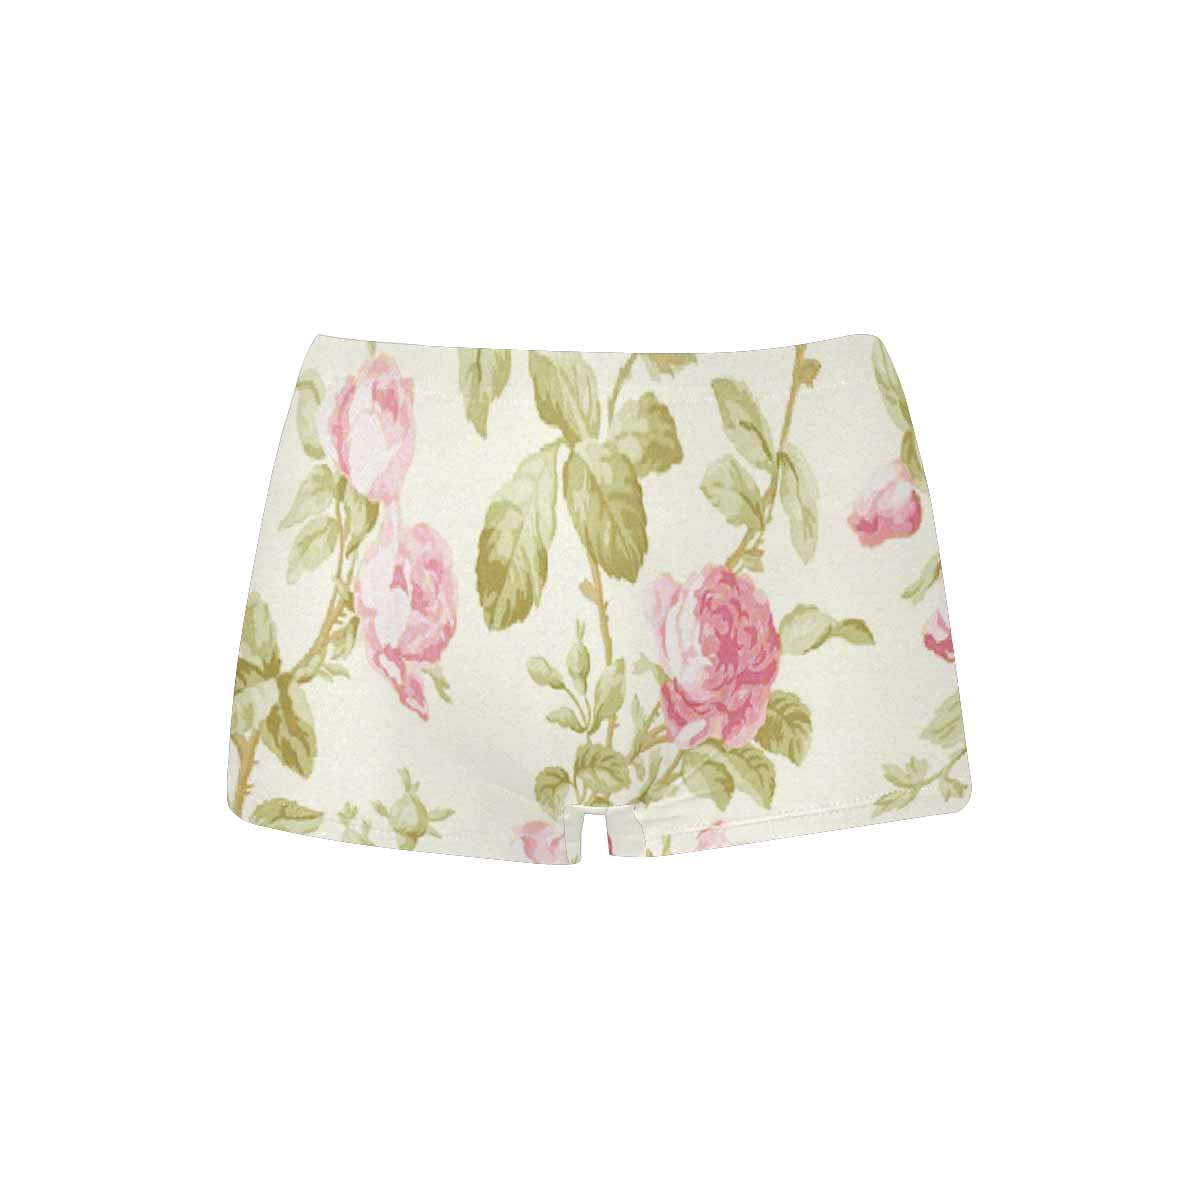 Floral 2, boyshorts, daisy dukes, pum pum shorts, panties, design 13